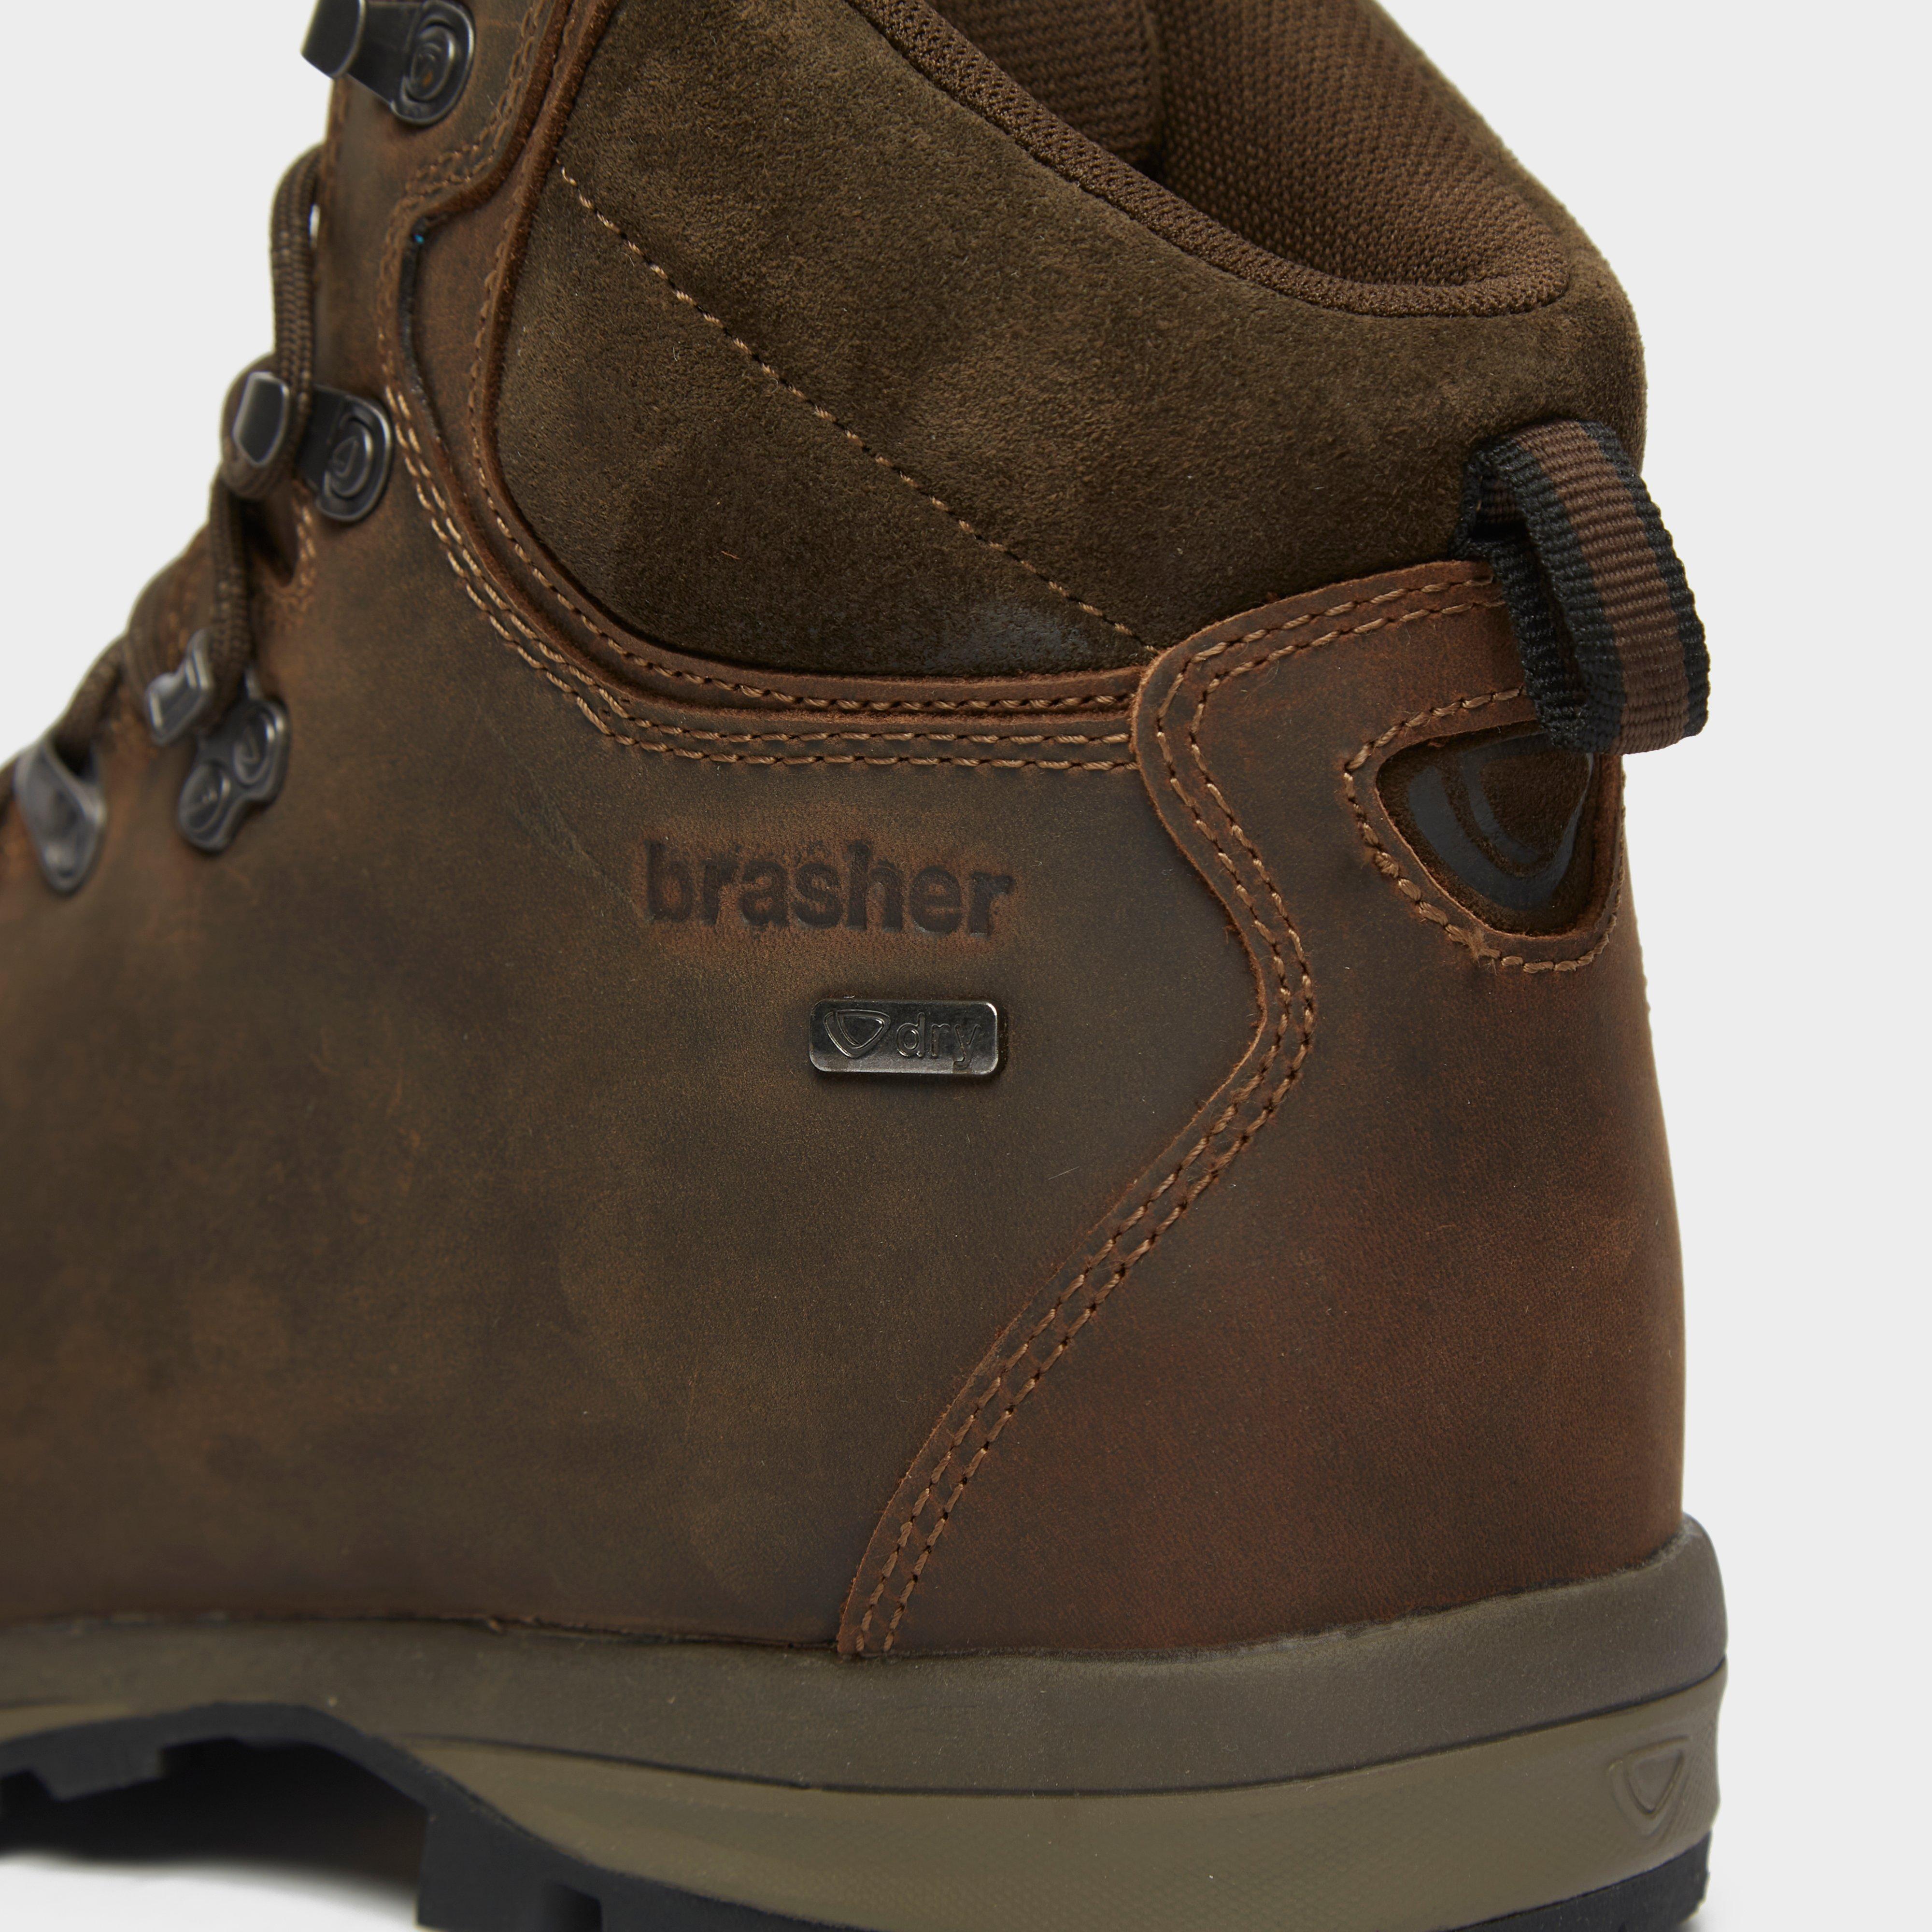 New Brasher Men’s Country Walker Walking Boots